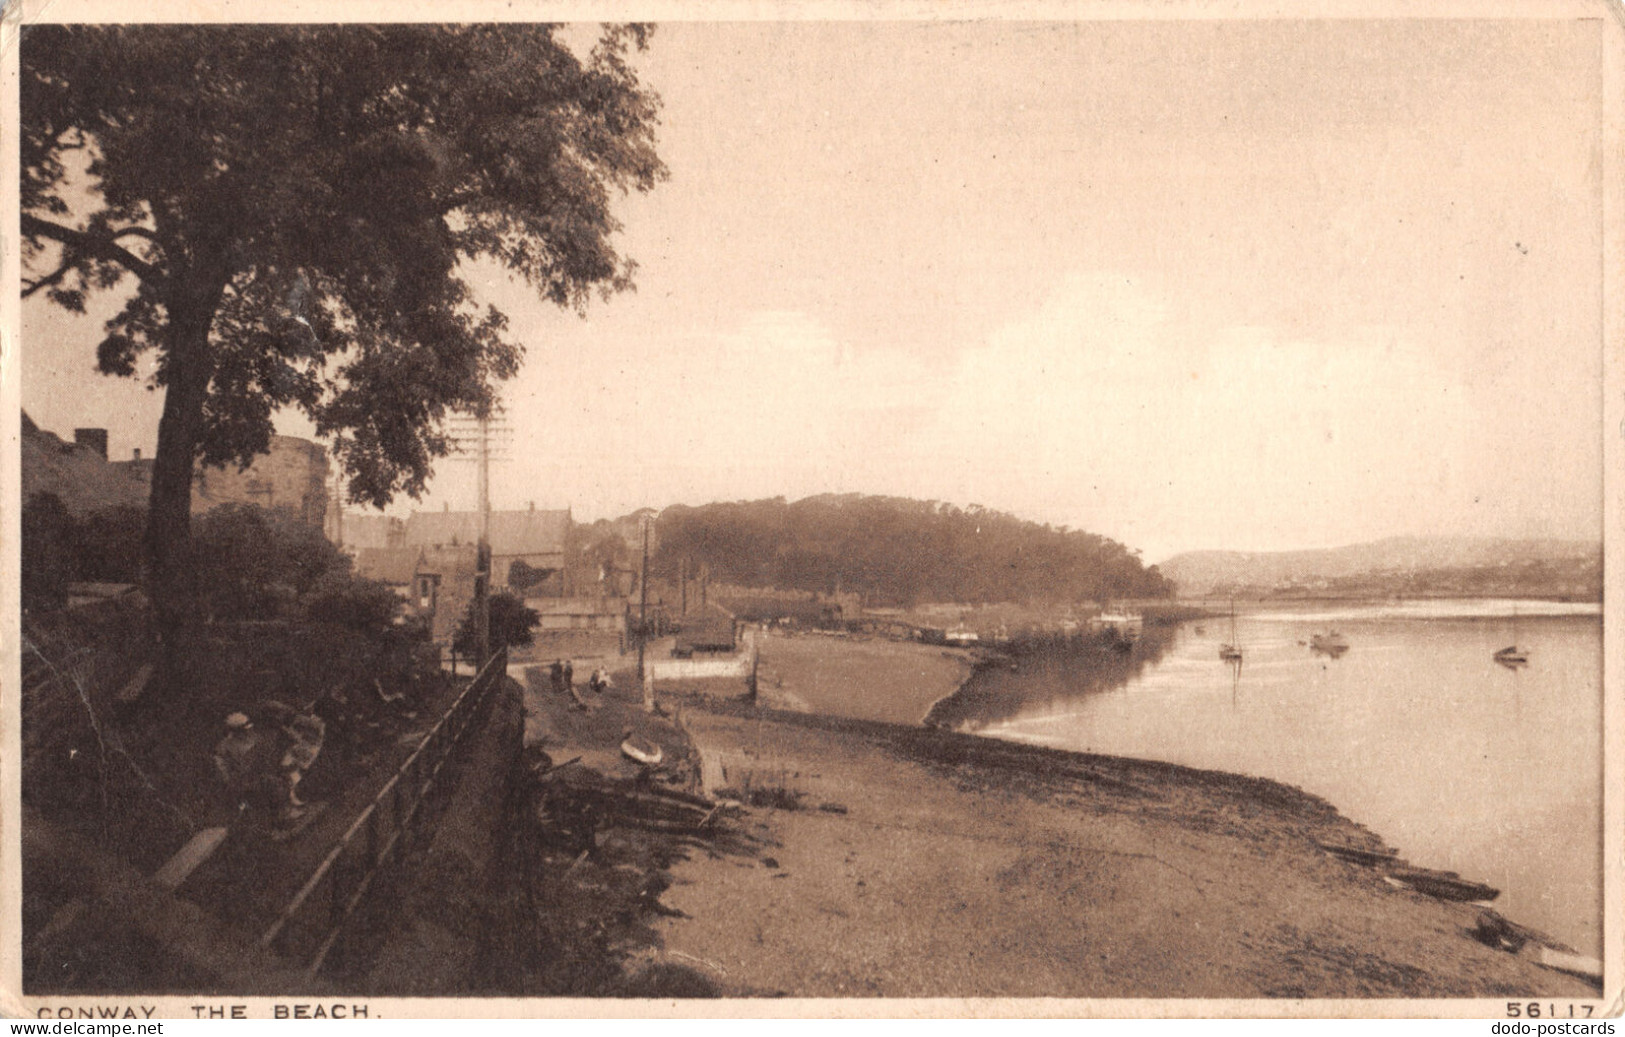 R329228 Conway. The Beach. Photochrom. Postcard. 1926 - Welt